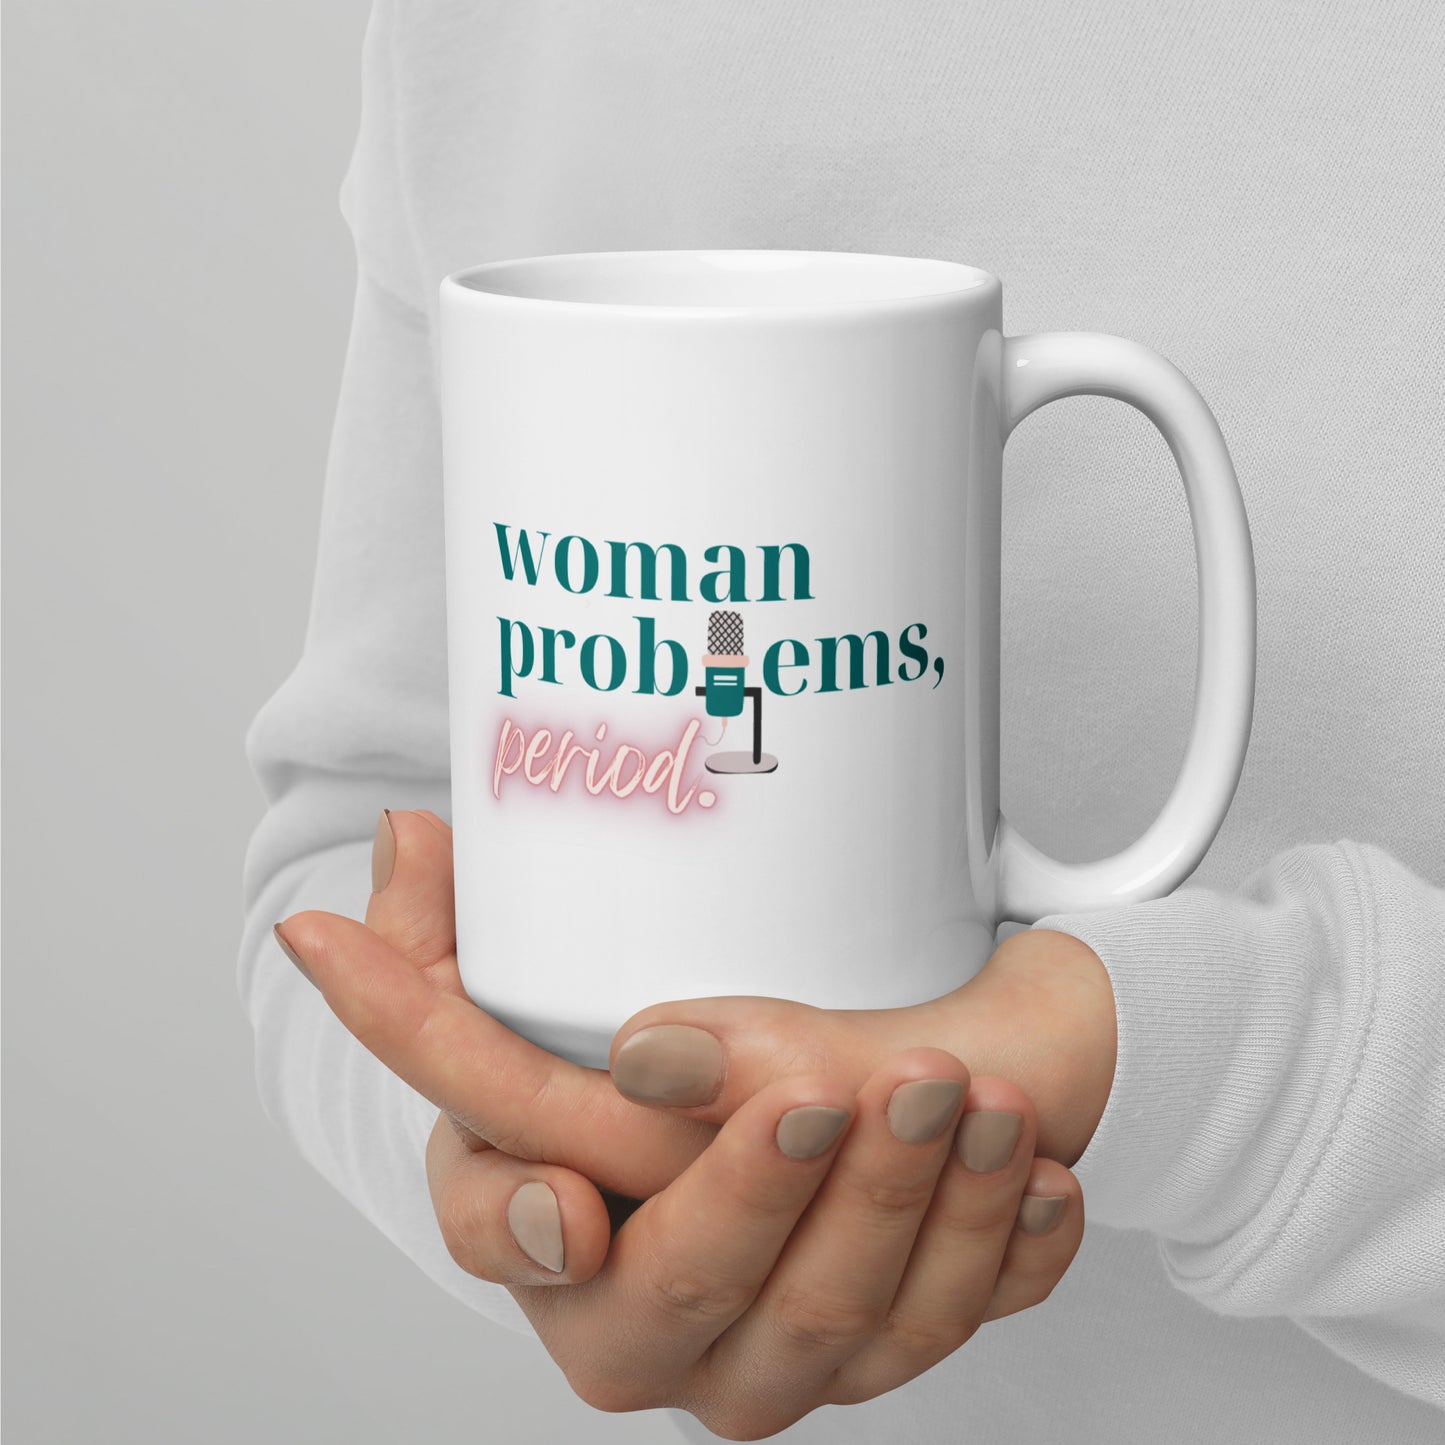 Woman Problems, Period. White Glossy Mug